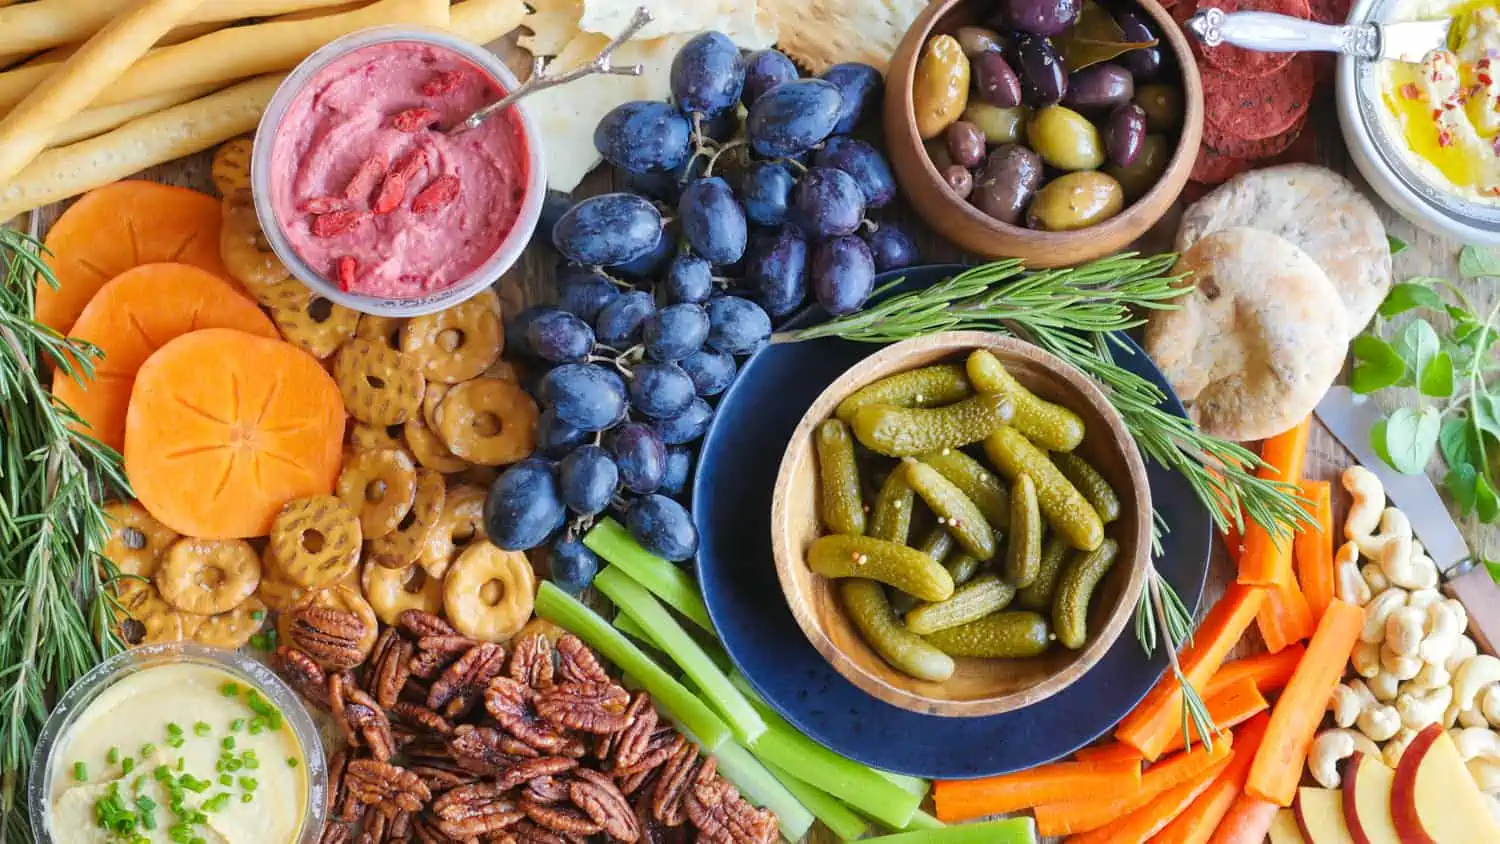 A vegan hummus board filled with fruits, nuts, veggies, and various bowls of hummus.